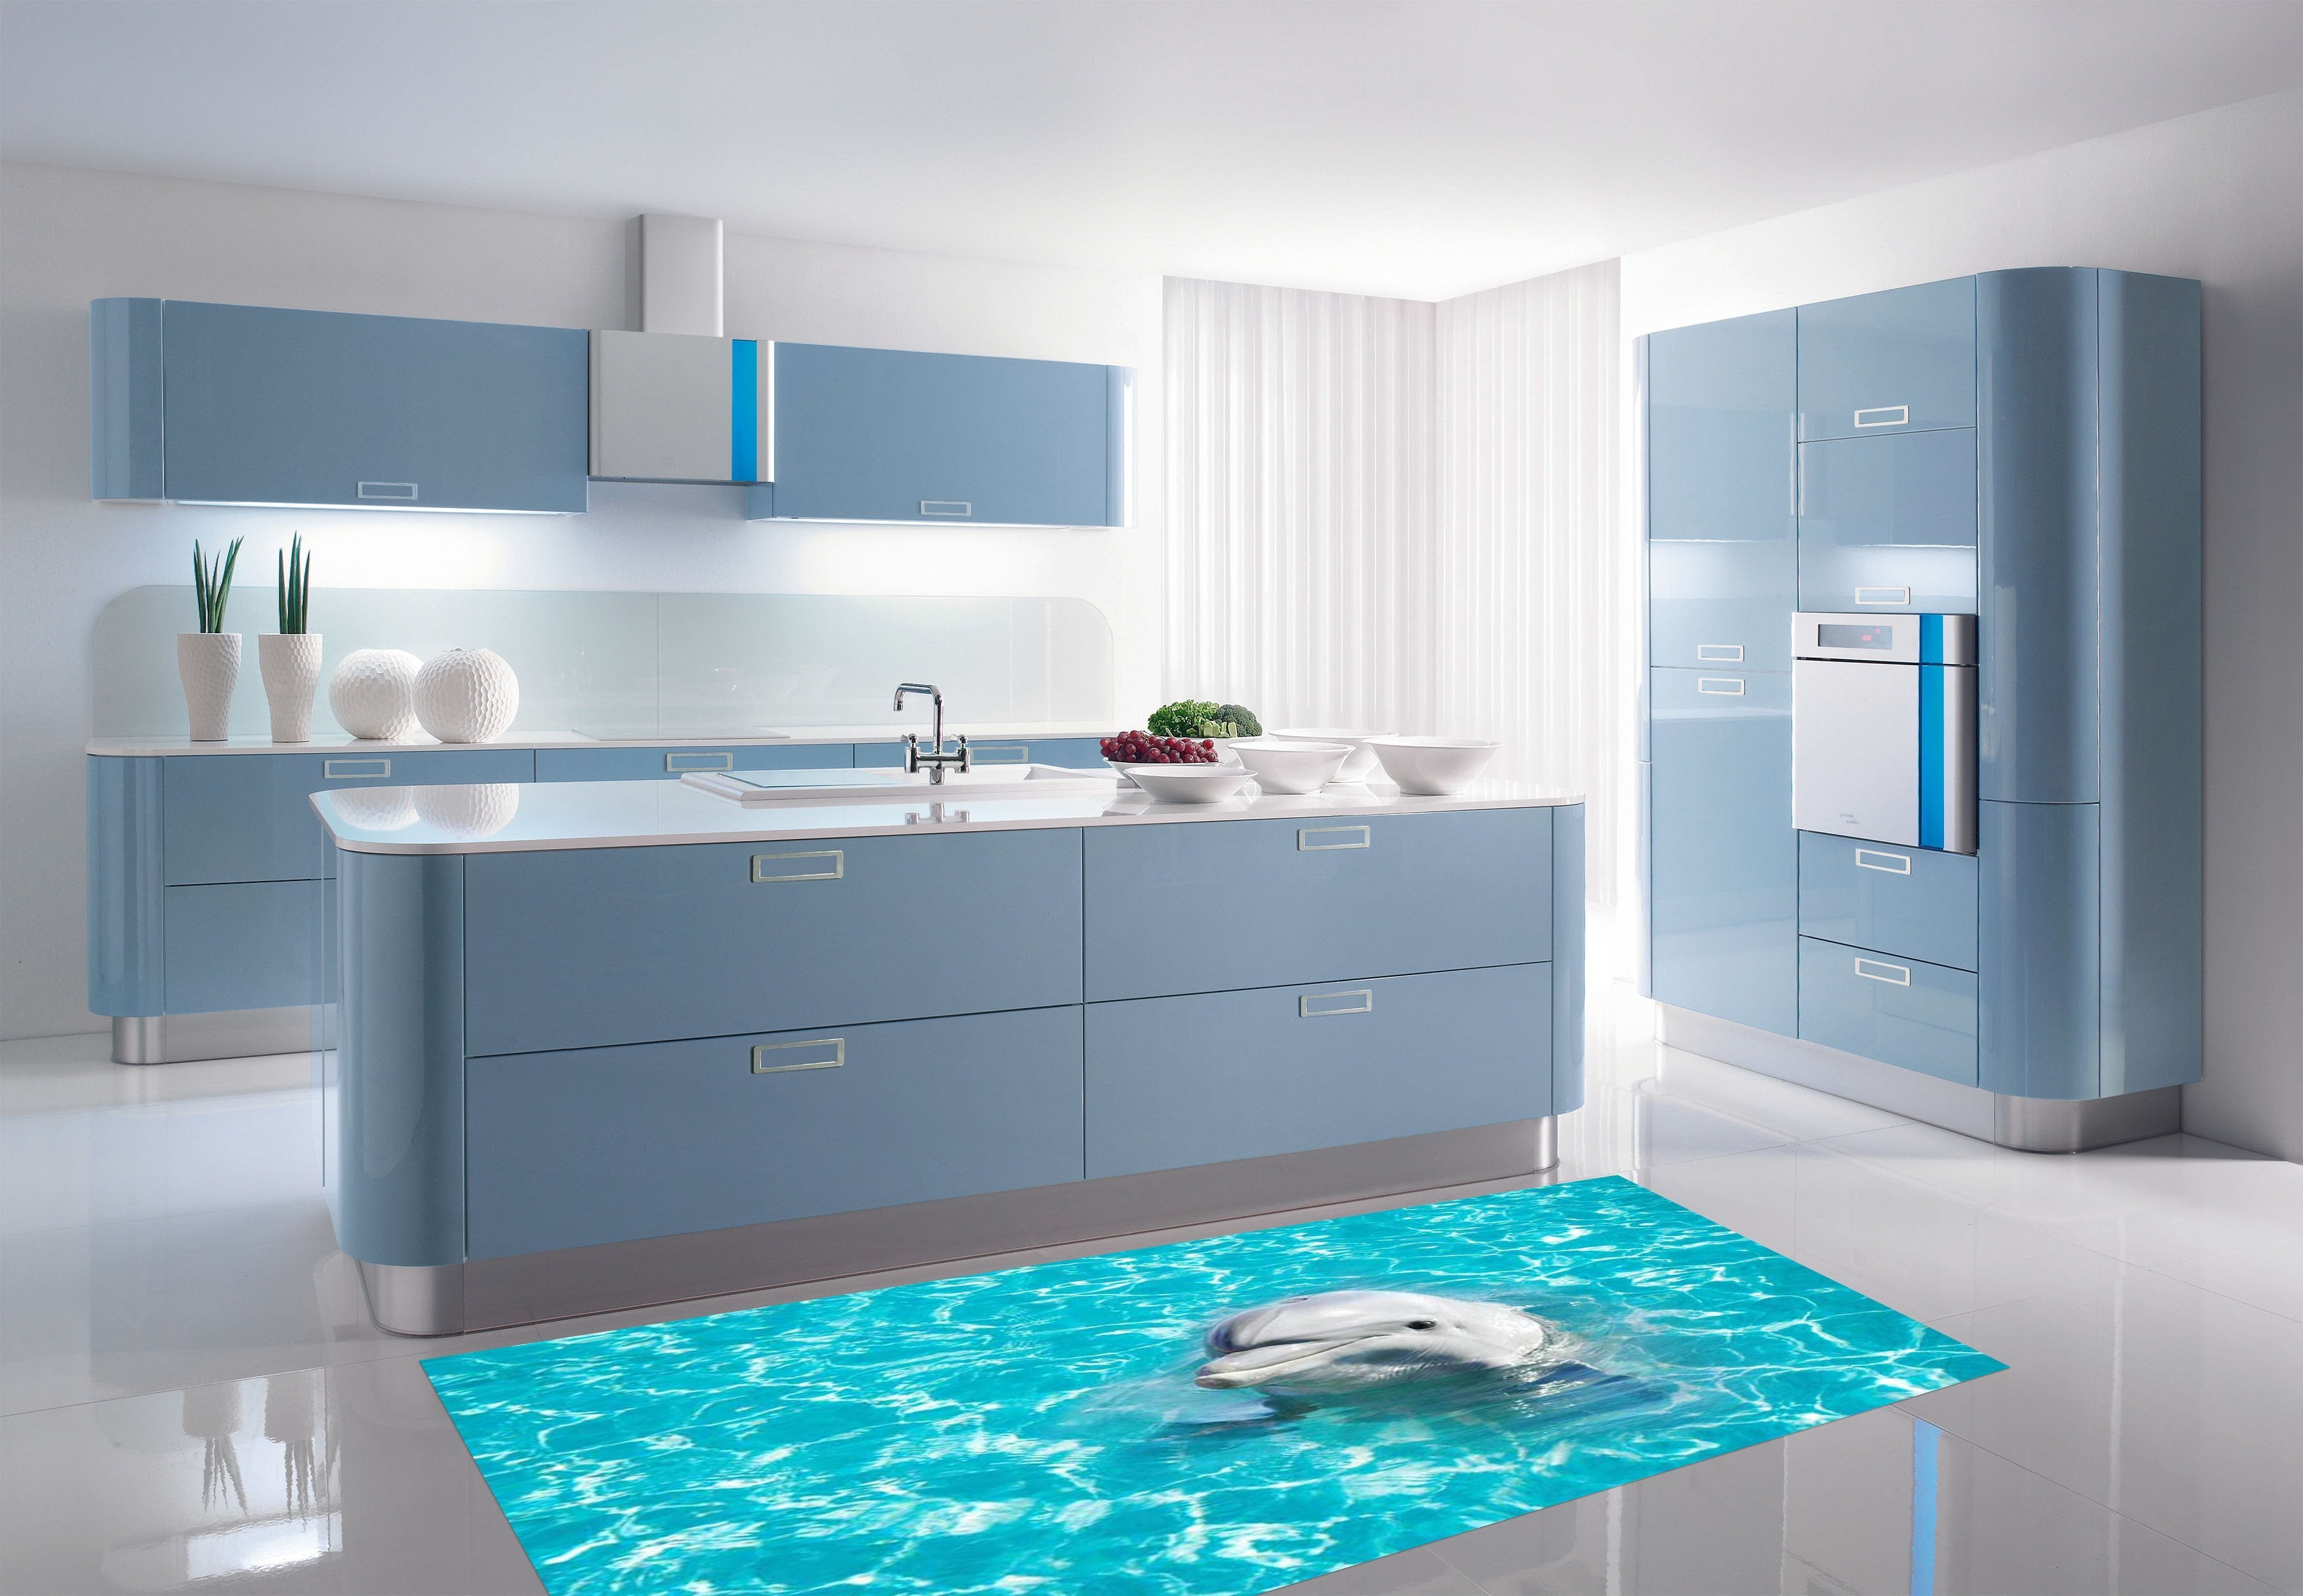 3D Blue Sea Dolphin 031 Kitchen Mat Floor Mural Wallpaper AJ Wallpaper 